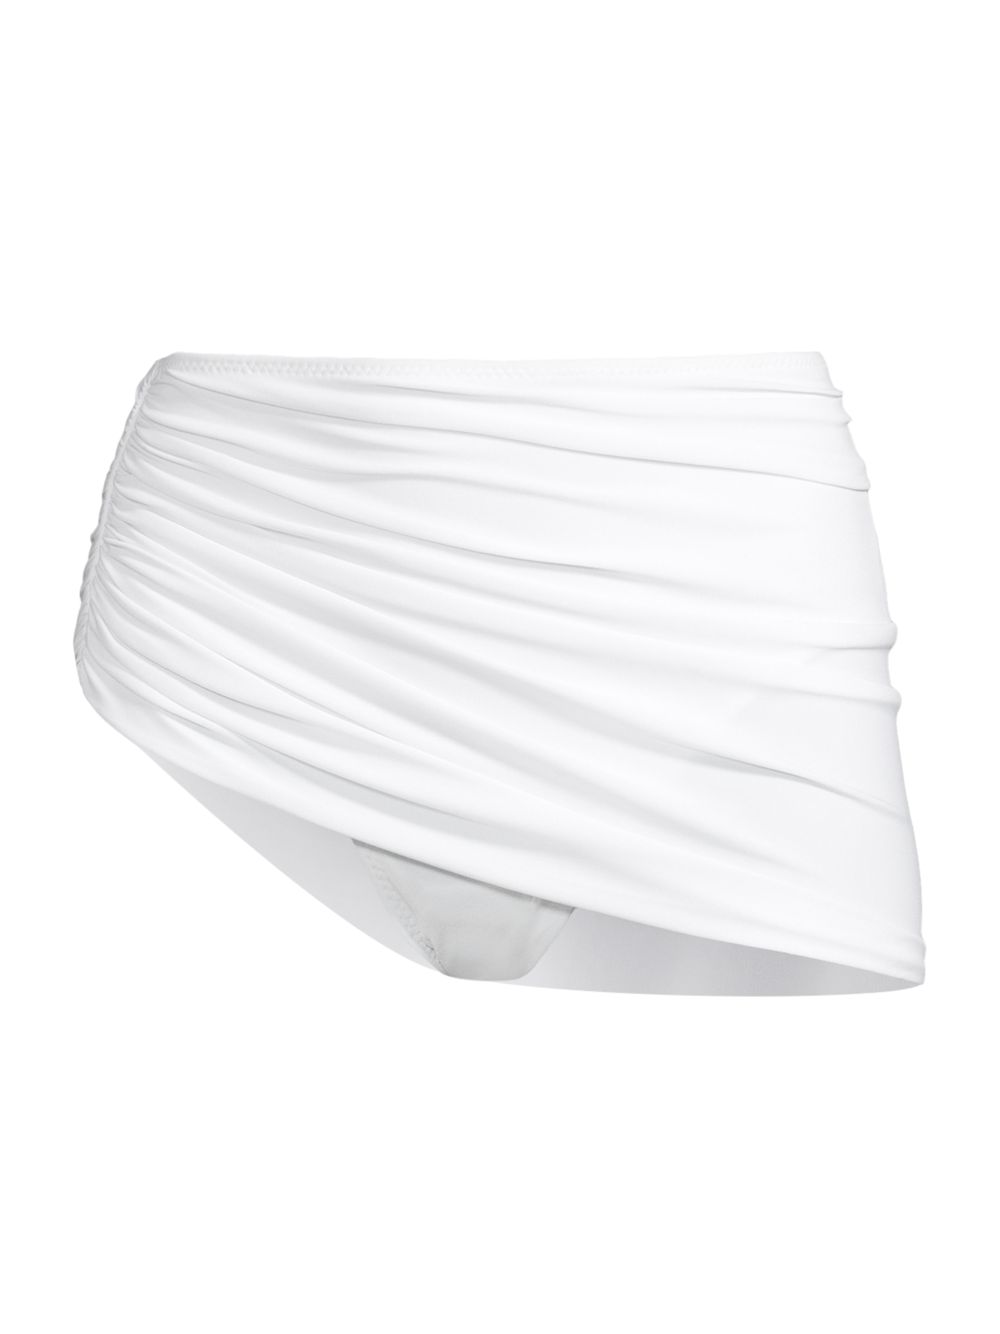 Асимметричные плавки бикини Diana Norma Kamali, белый плавки бикини norma kamali в полоску черный белый